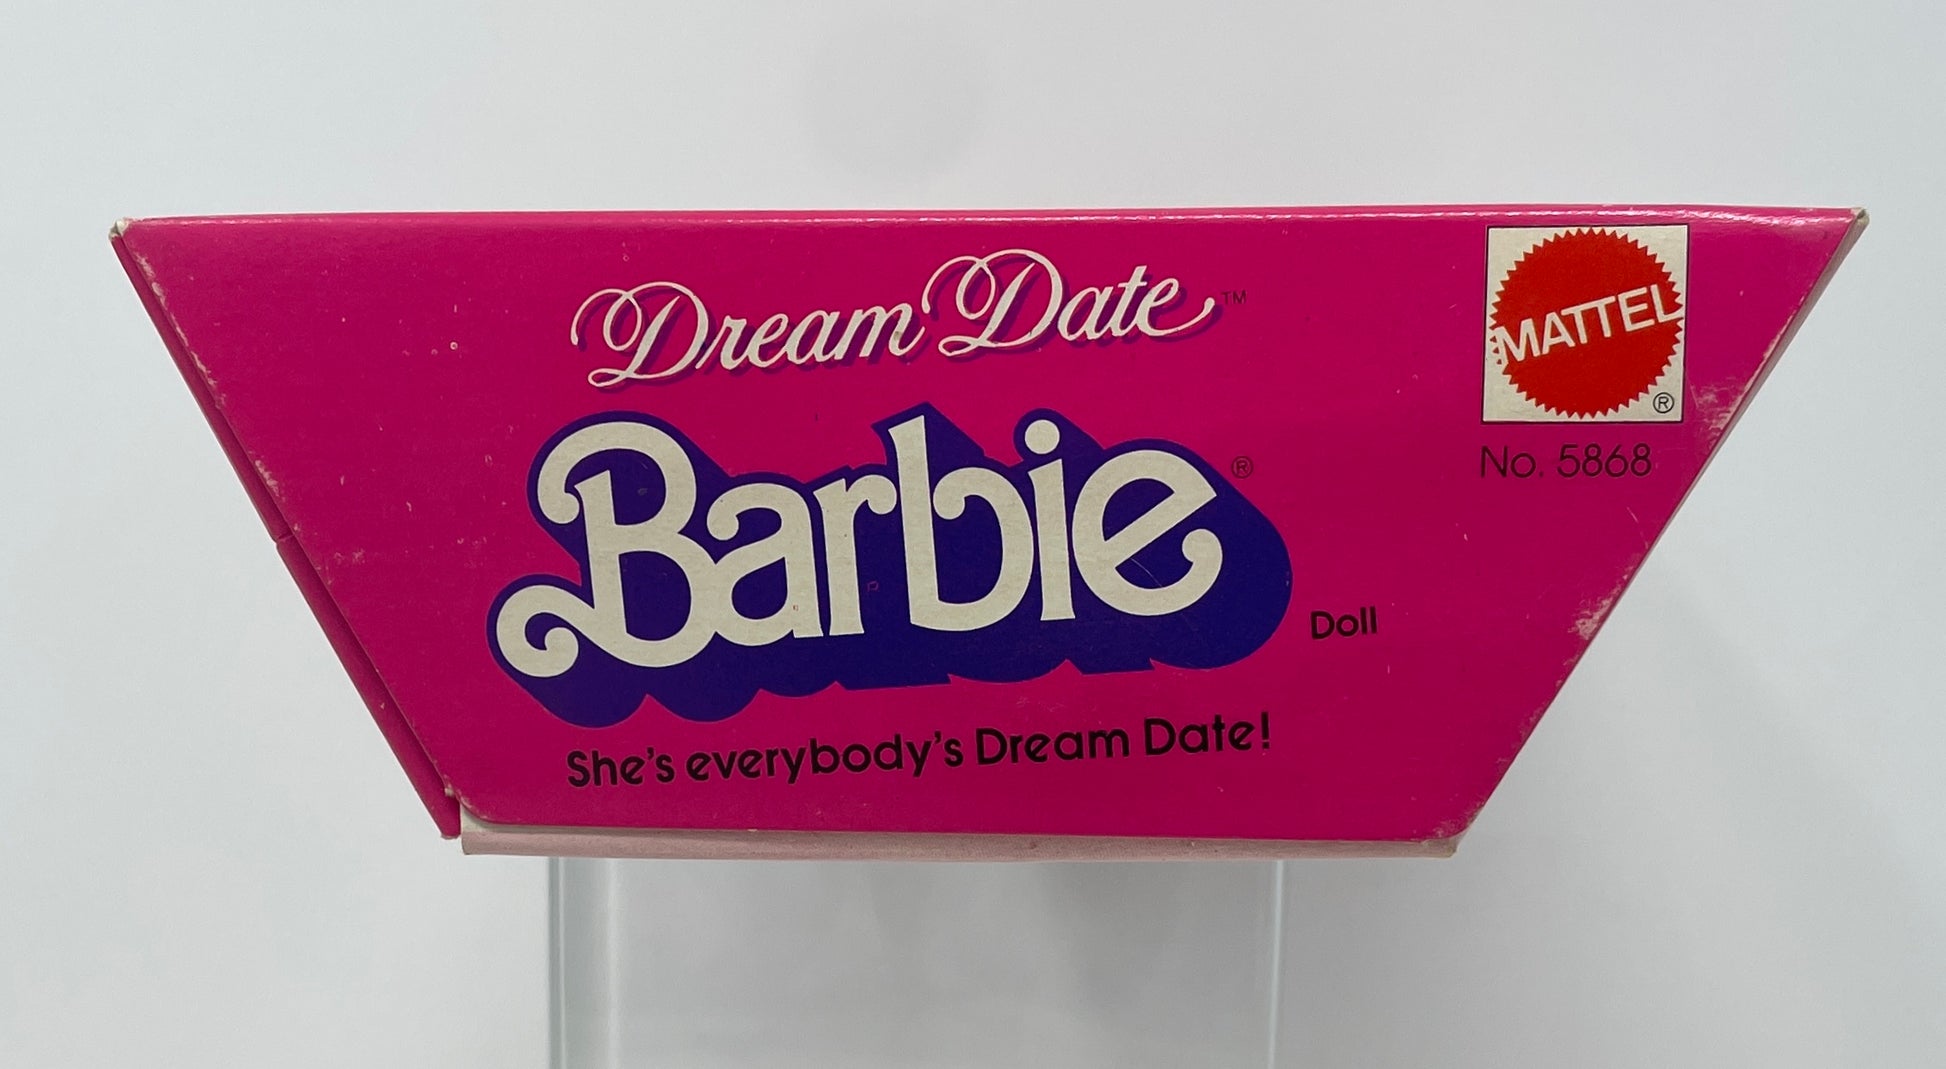 1982 Dream Date Barbie comparison: Taiwan vs philippines